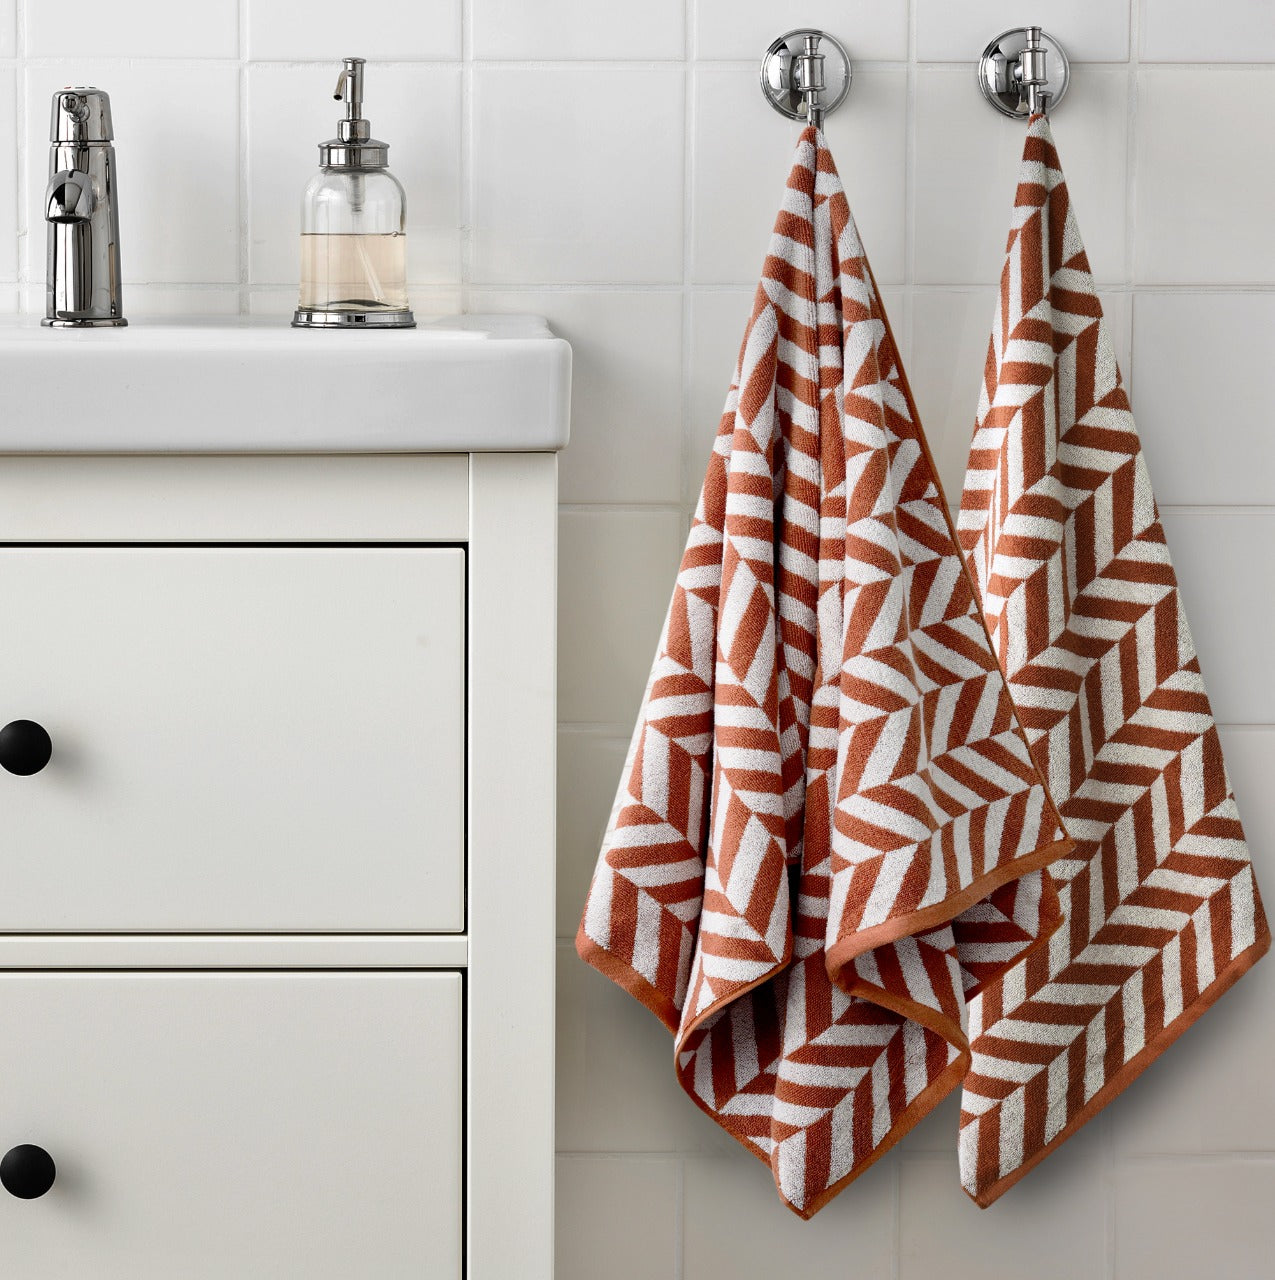 Bath Towel Yarn Dyed-Brown Chevrons Apricot